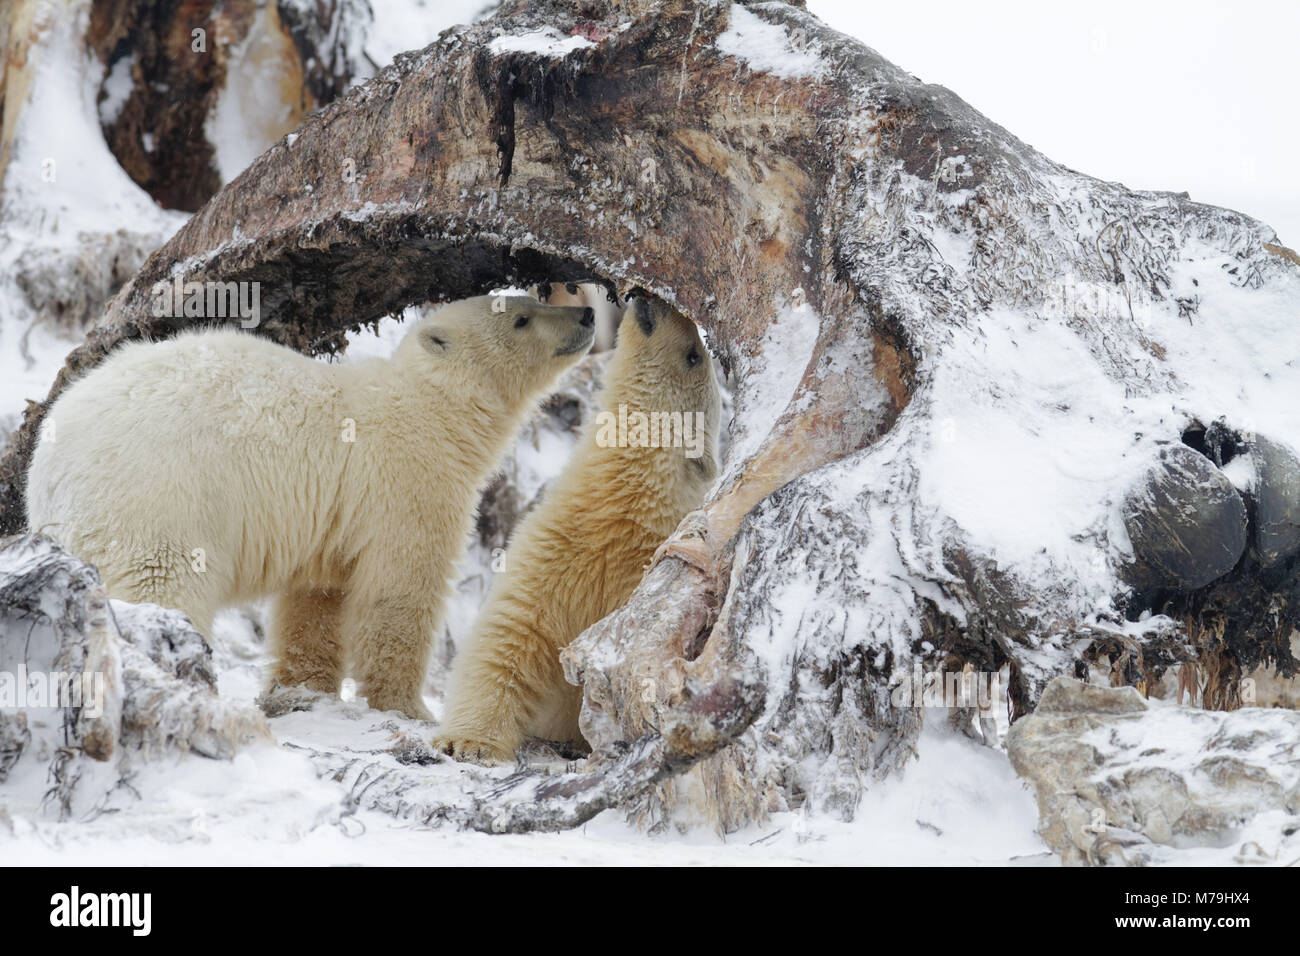 North America, the USA, Alaska, North Alaska, Arctic Nationwide Wildlife Refuge, Kaktovik, polar bear, Ursus maritimus, Stock Photo